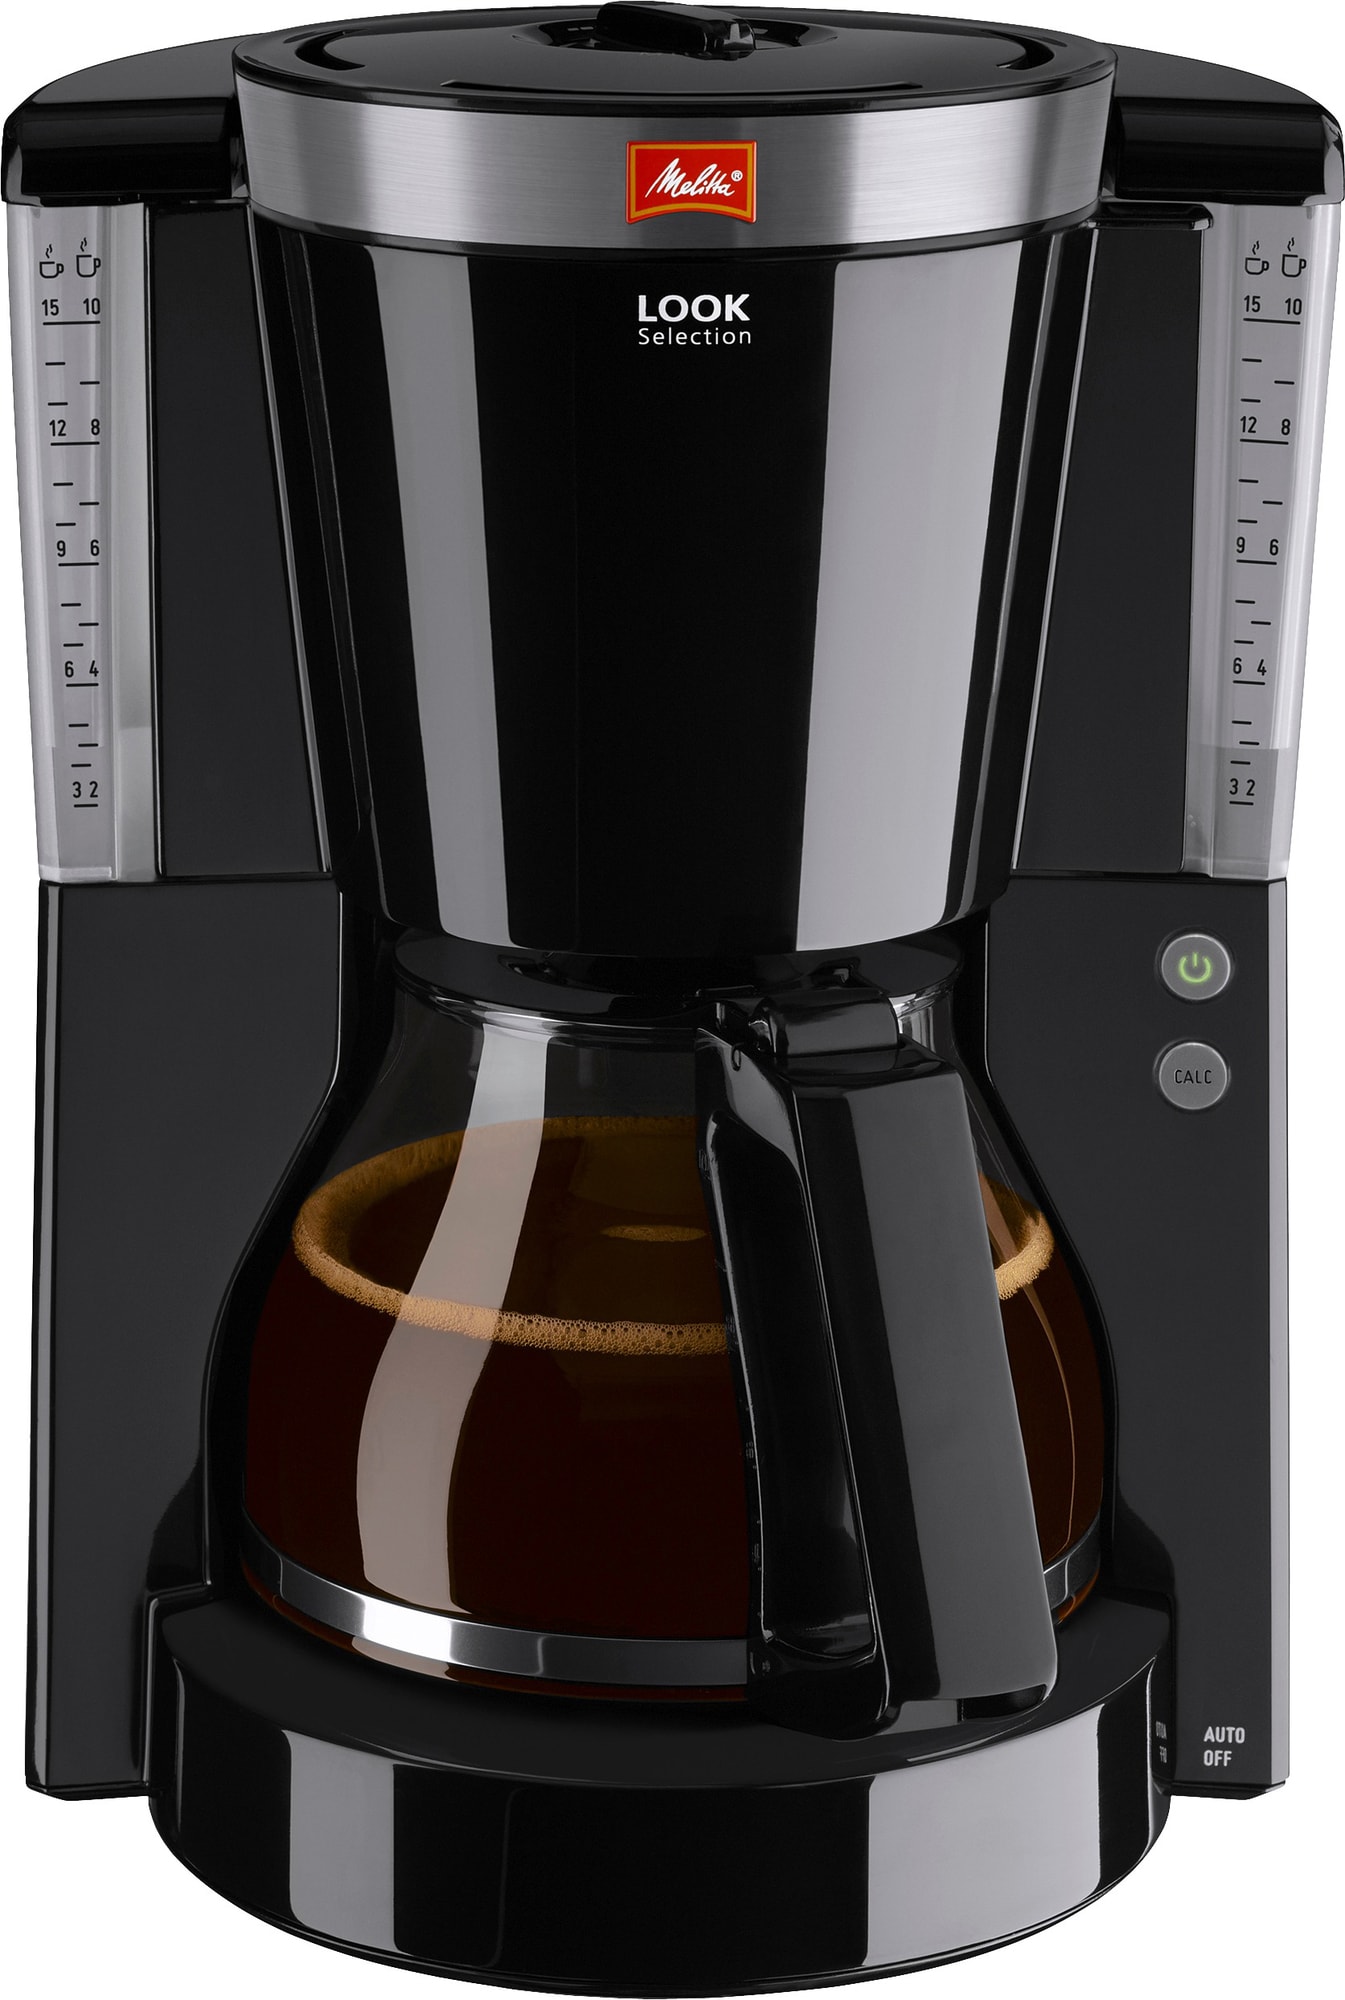 Melitta Look Selection kaffemaskine MEL20986 | Elgiganten